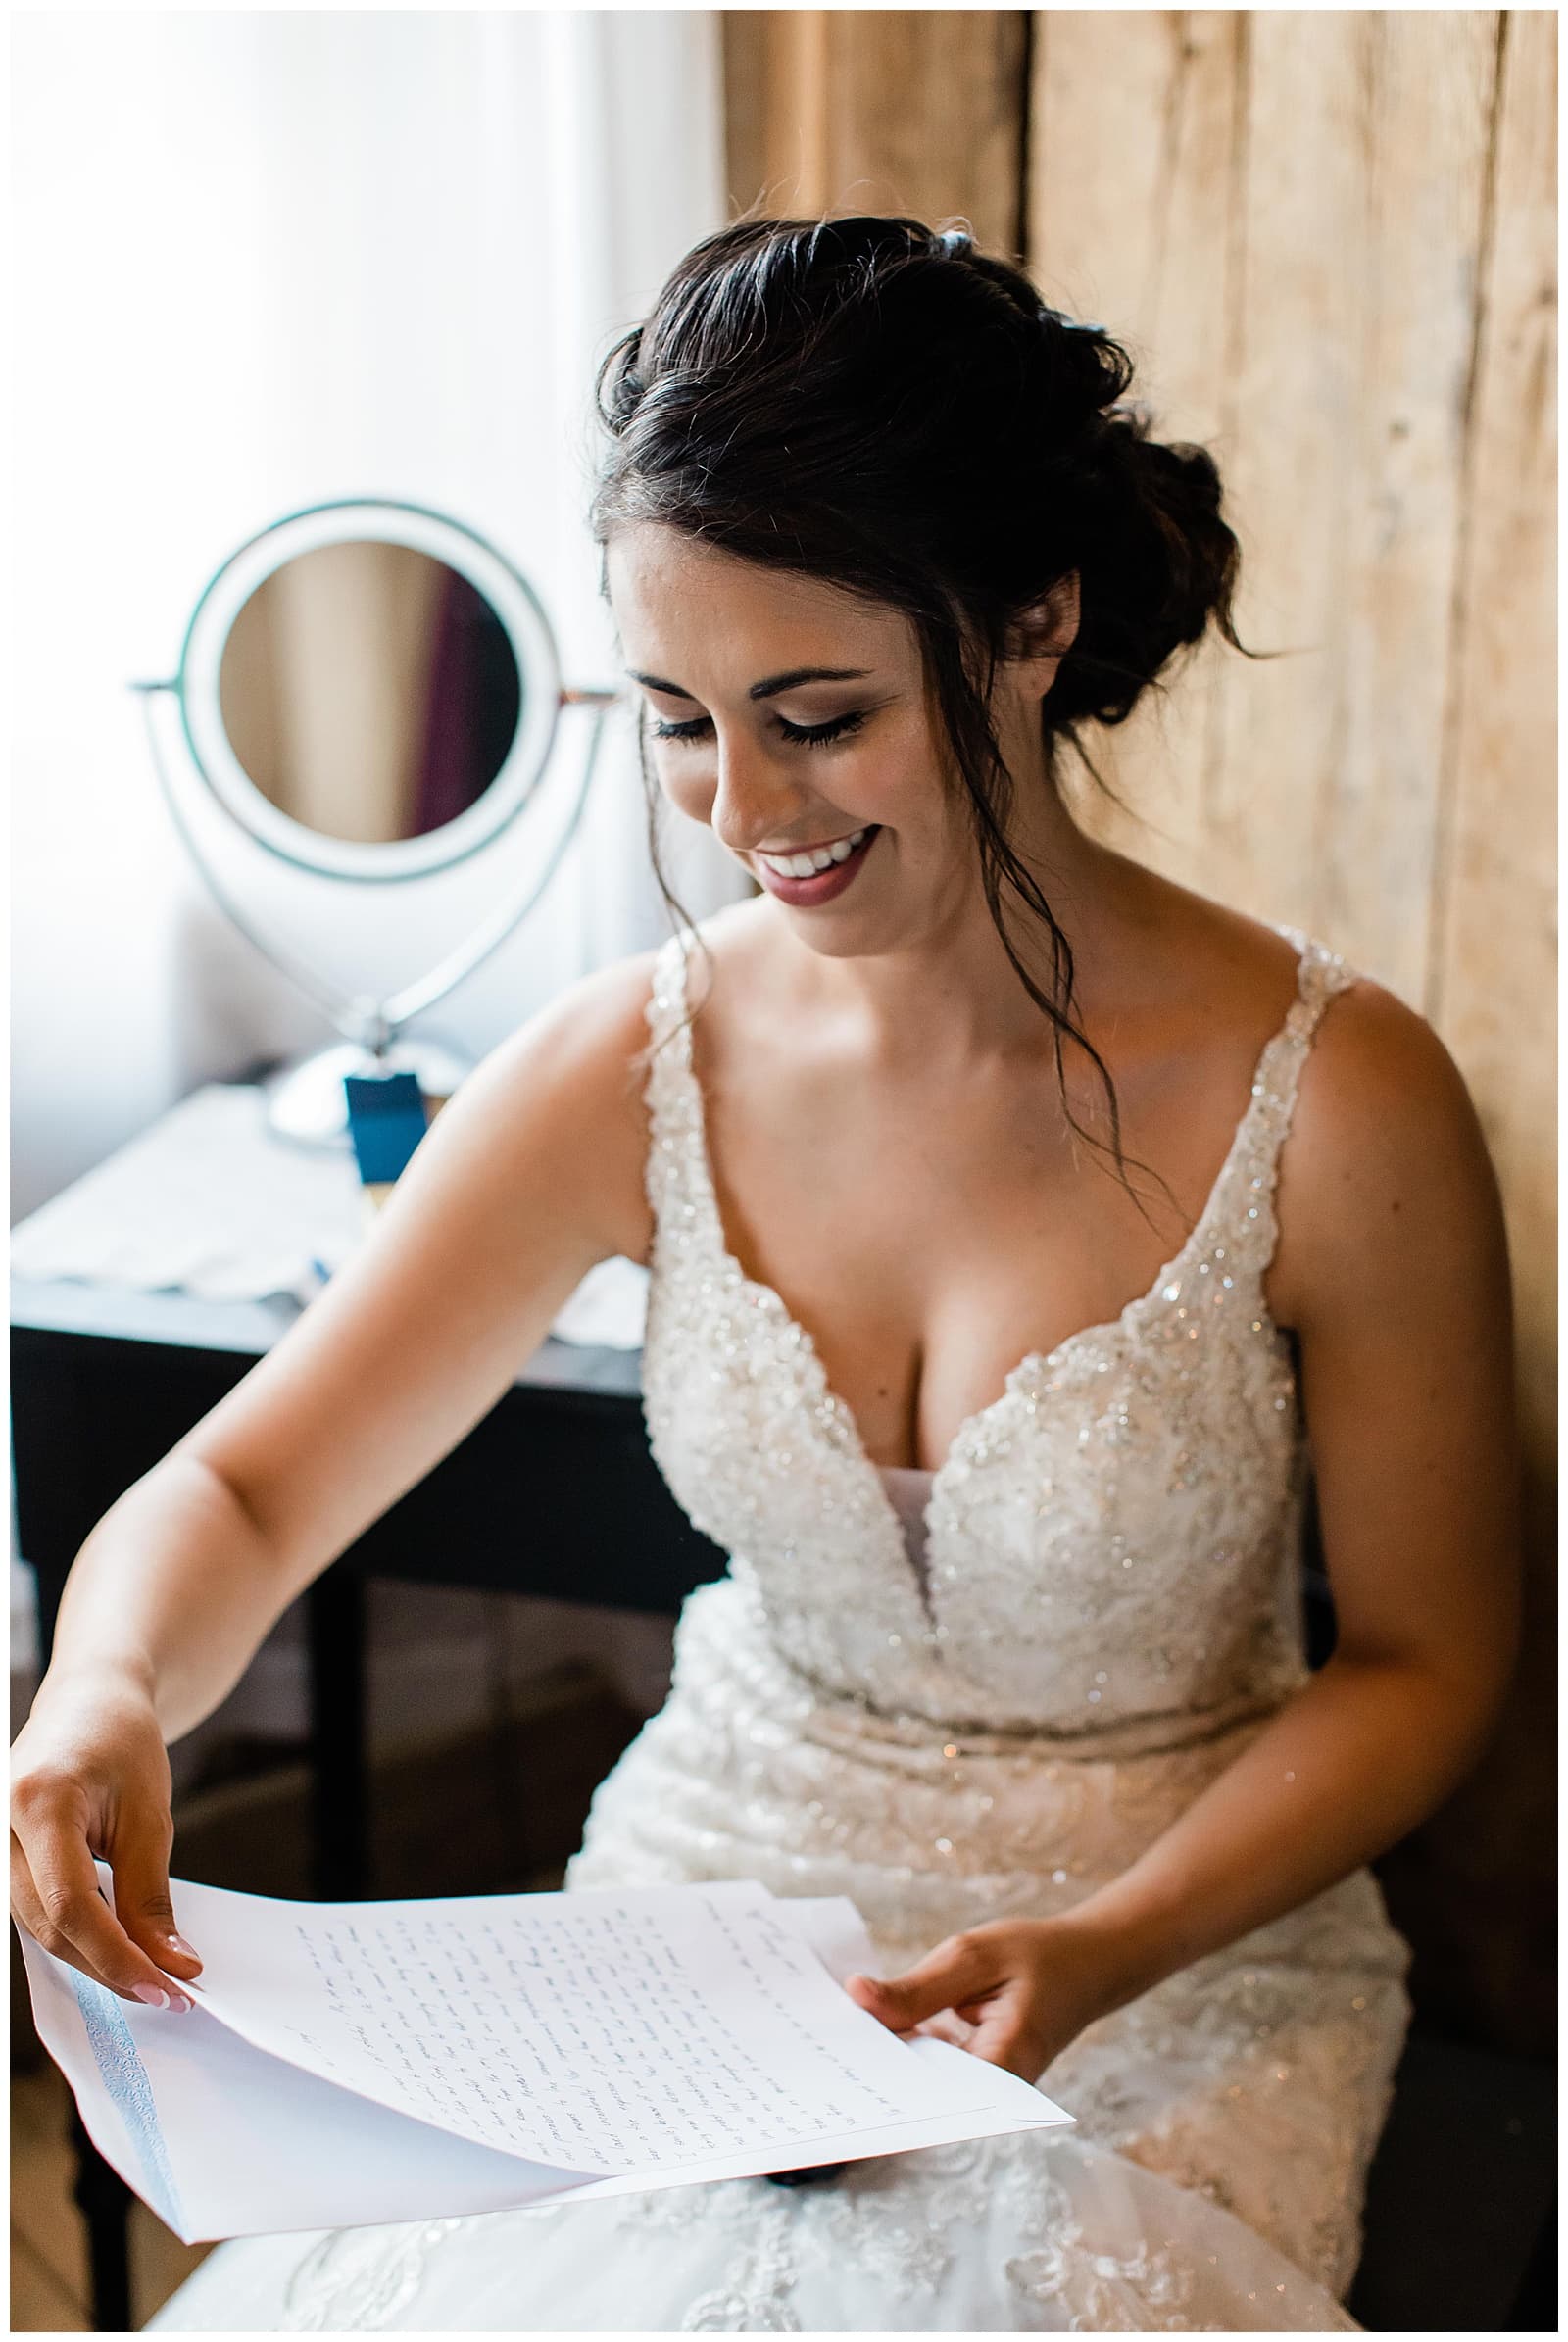 Danielle-Defayette-Photography-Middle-Fork-Barn-Wedding-VA-2020_0012.jpg